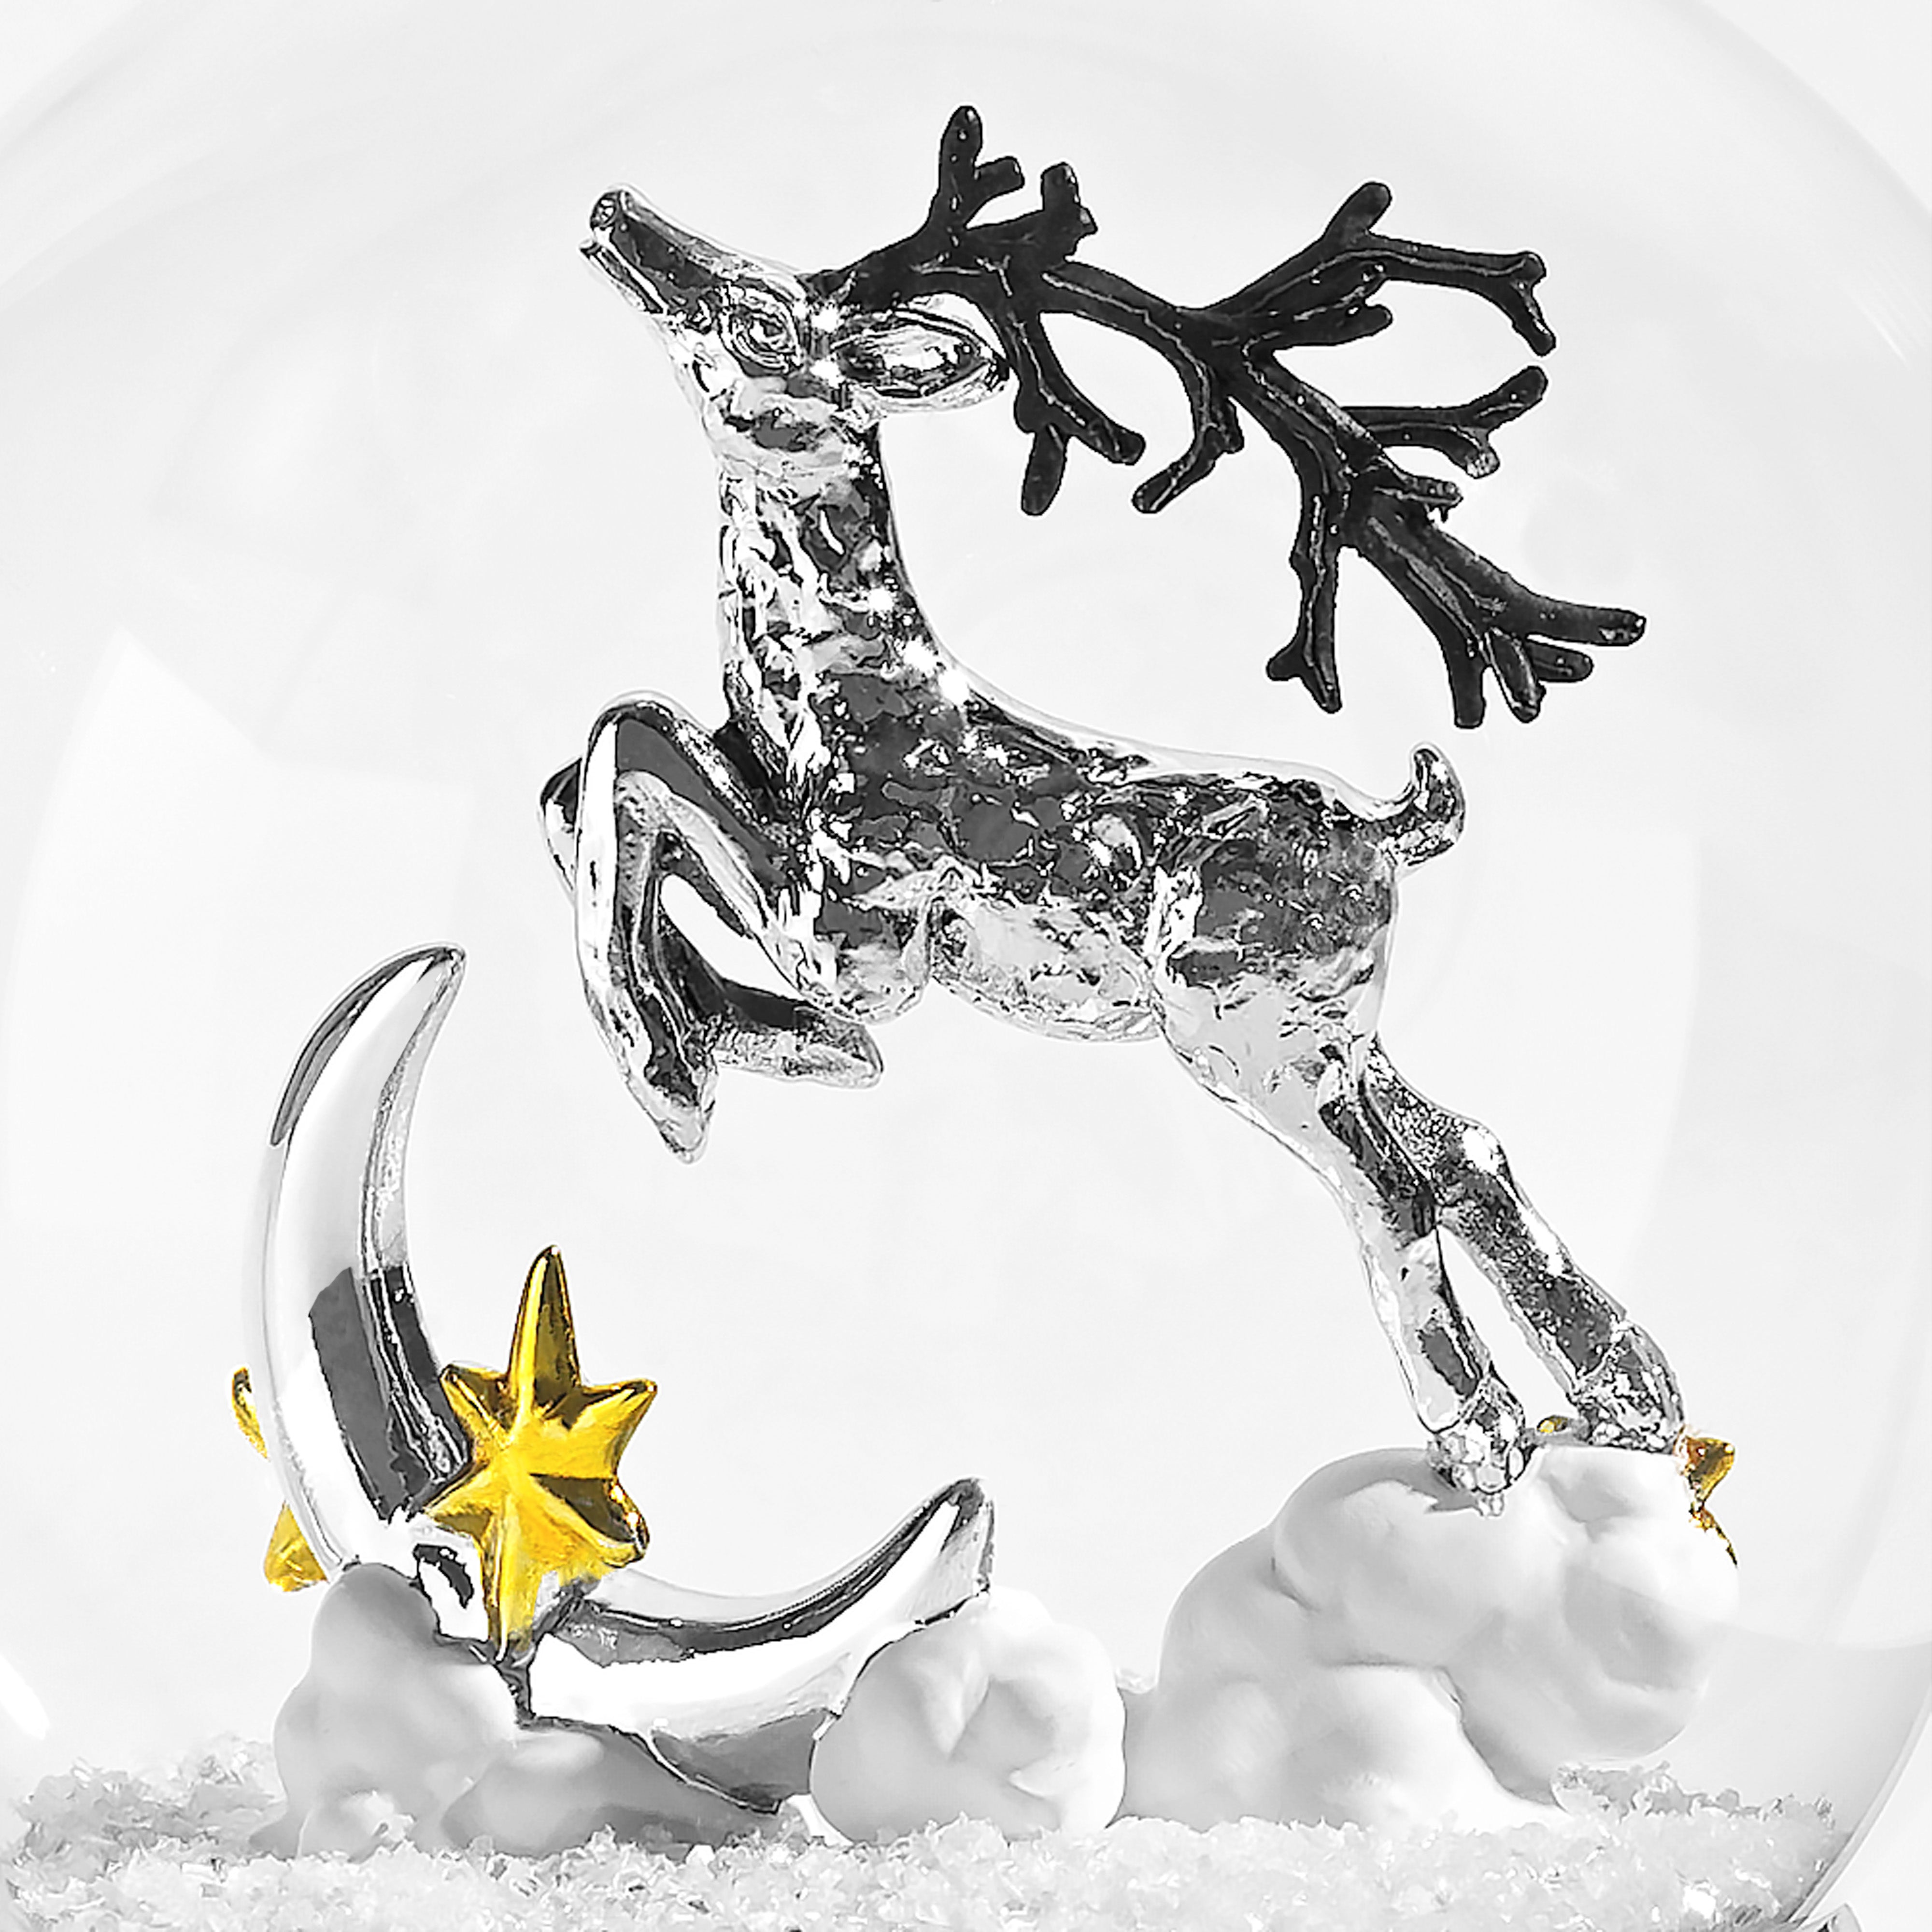 Michael Aram Reindeer Snow Globe Ornament